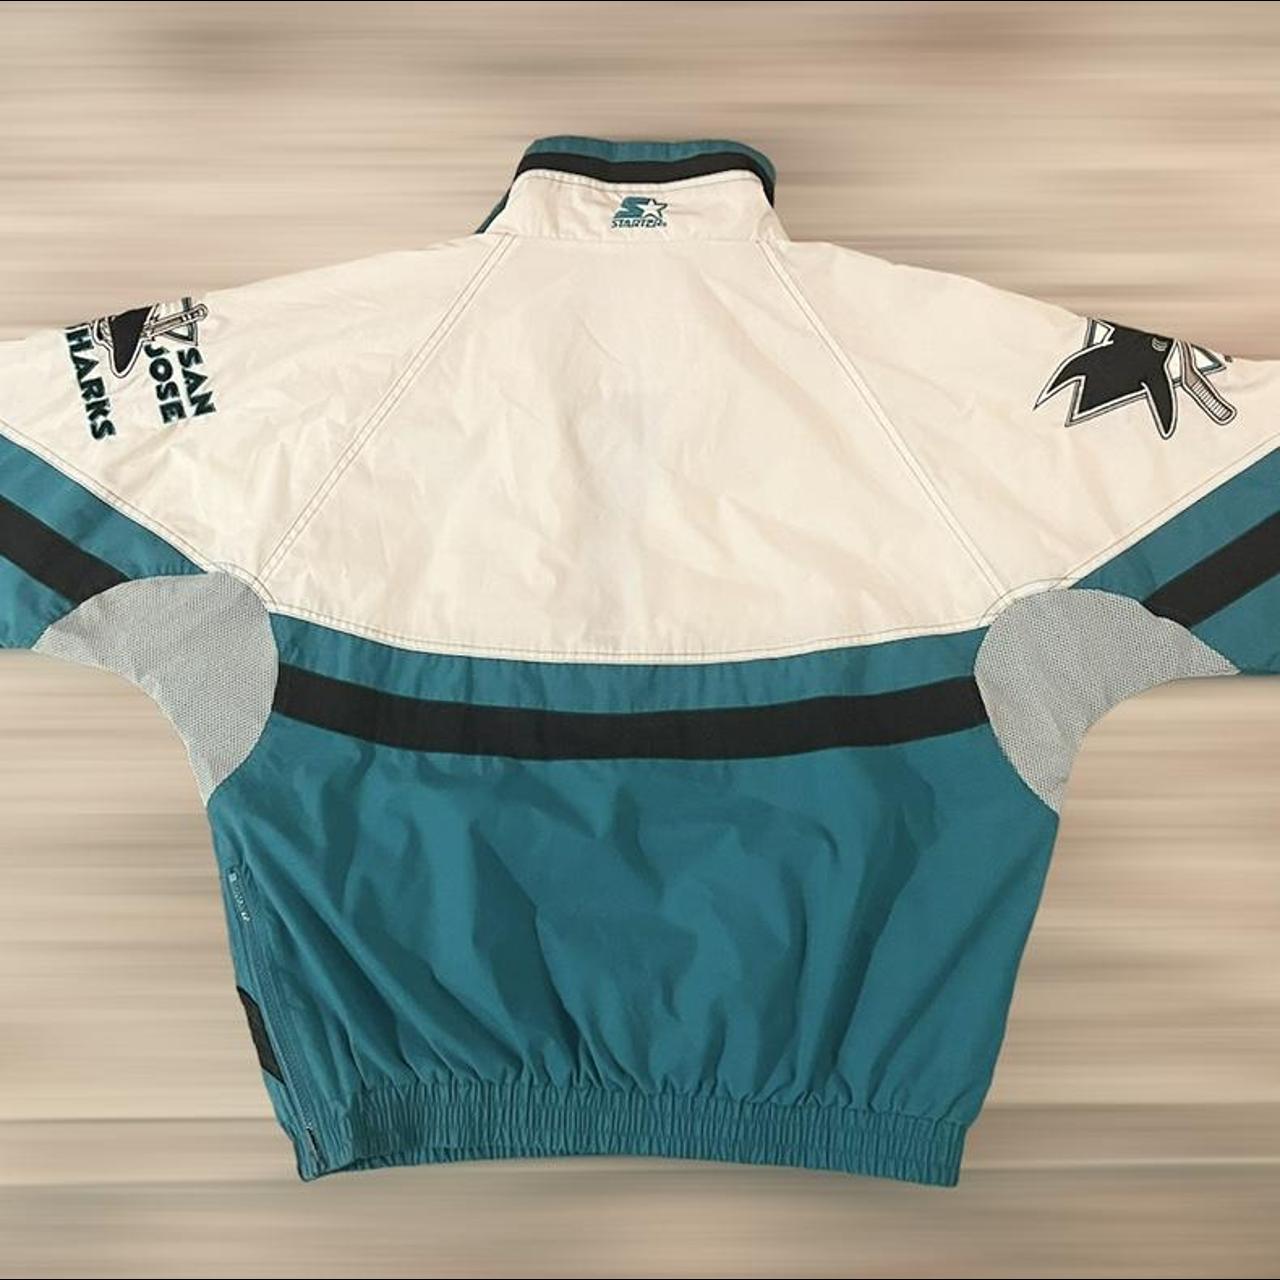 Vintage NHL San Jose Sharks 1992 Logo 7 Cotton Shirt - Depop